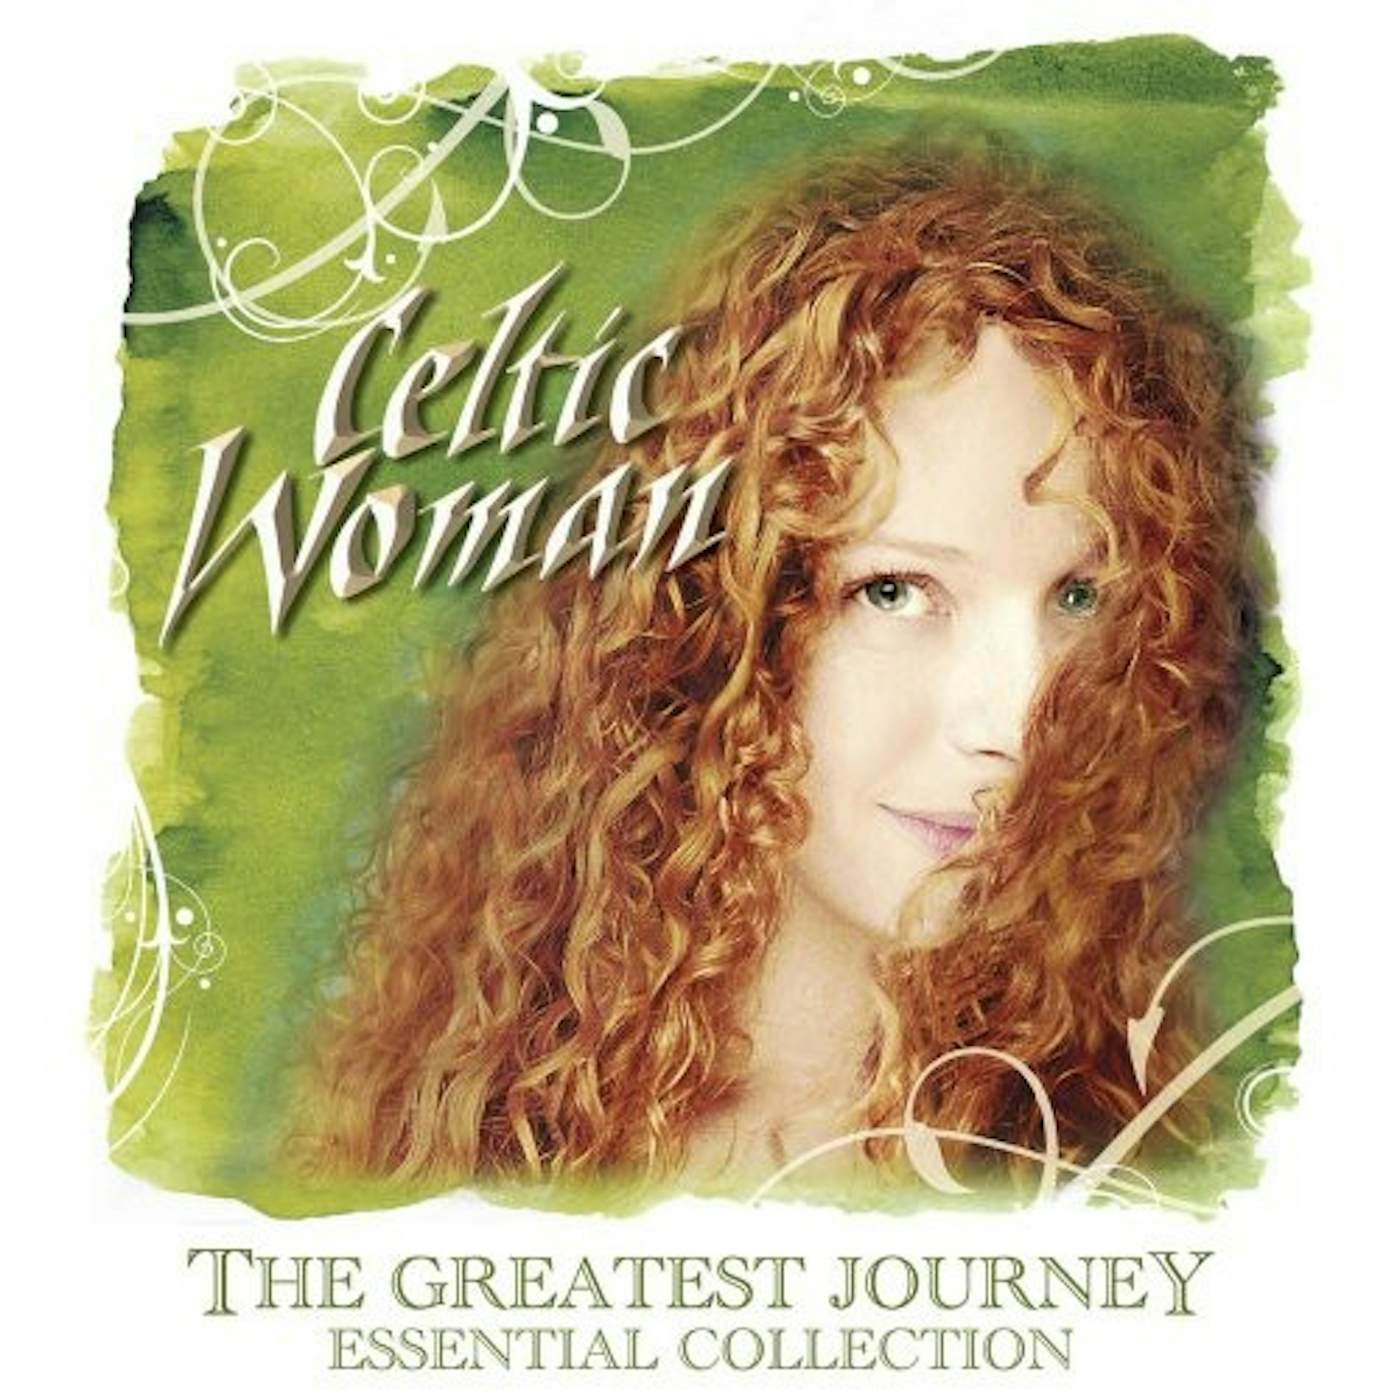 Celtic Woman GREATEST JOURNEY DVD